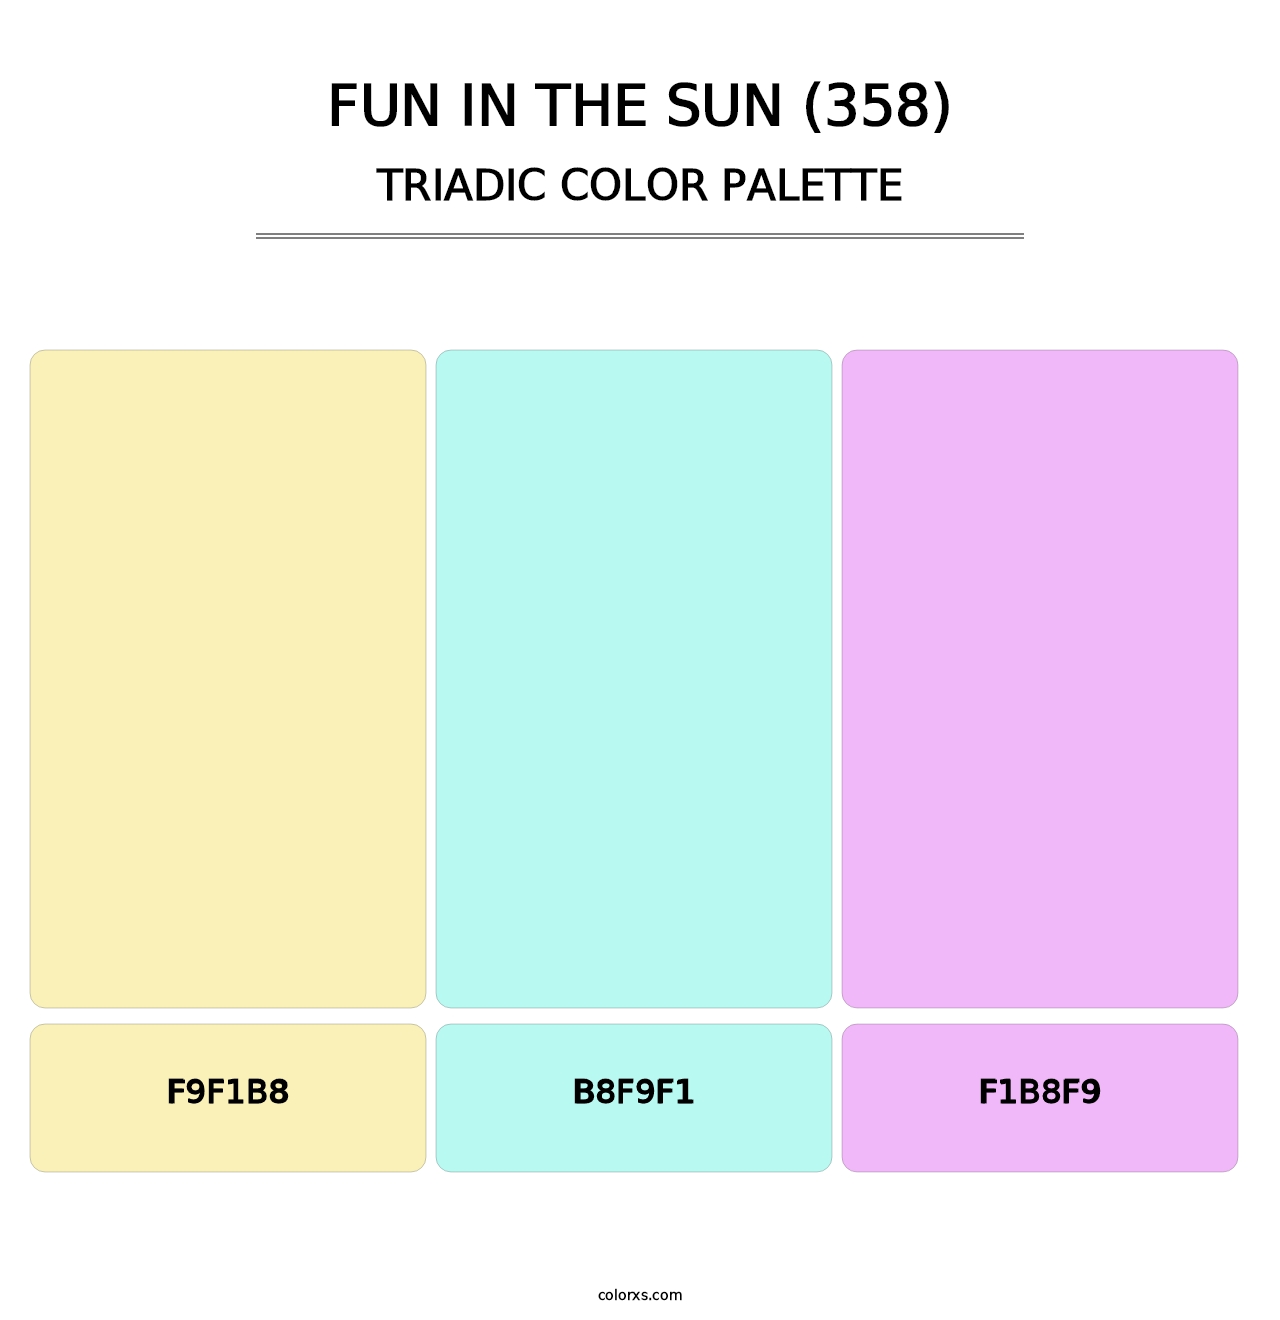 Fun in the Sun (358) - Triadic Color Palette